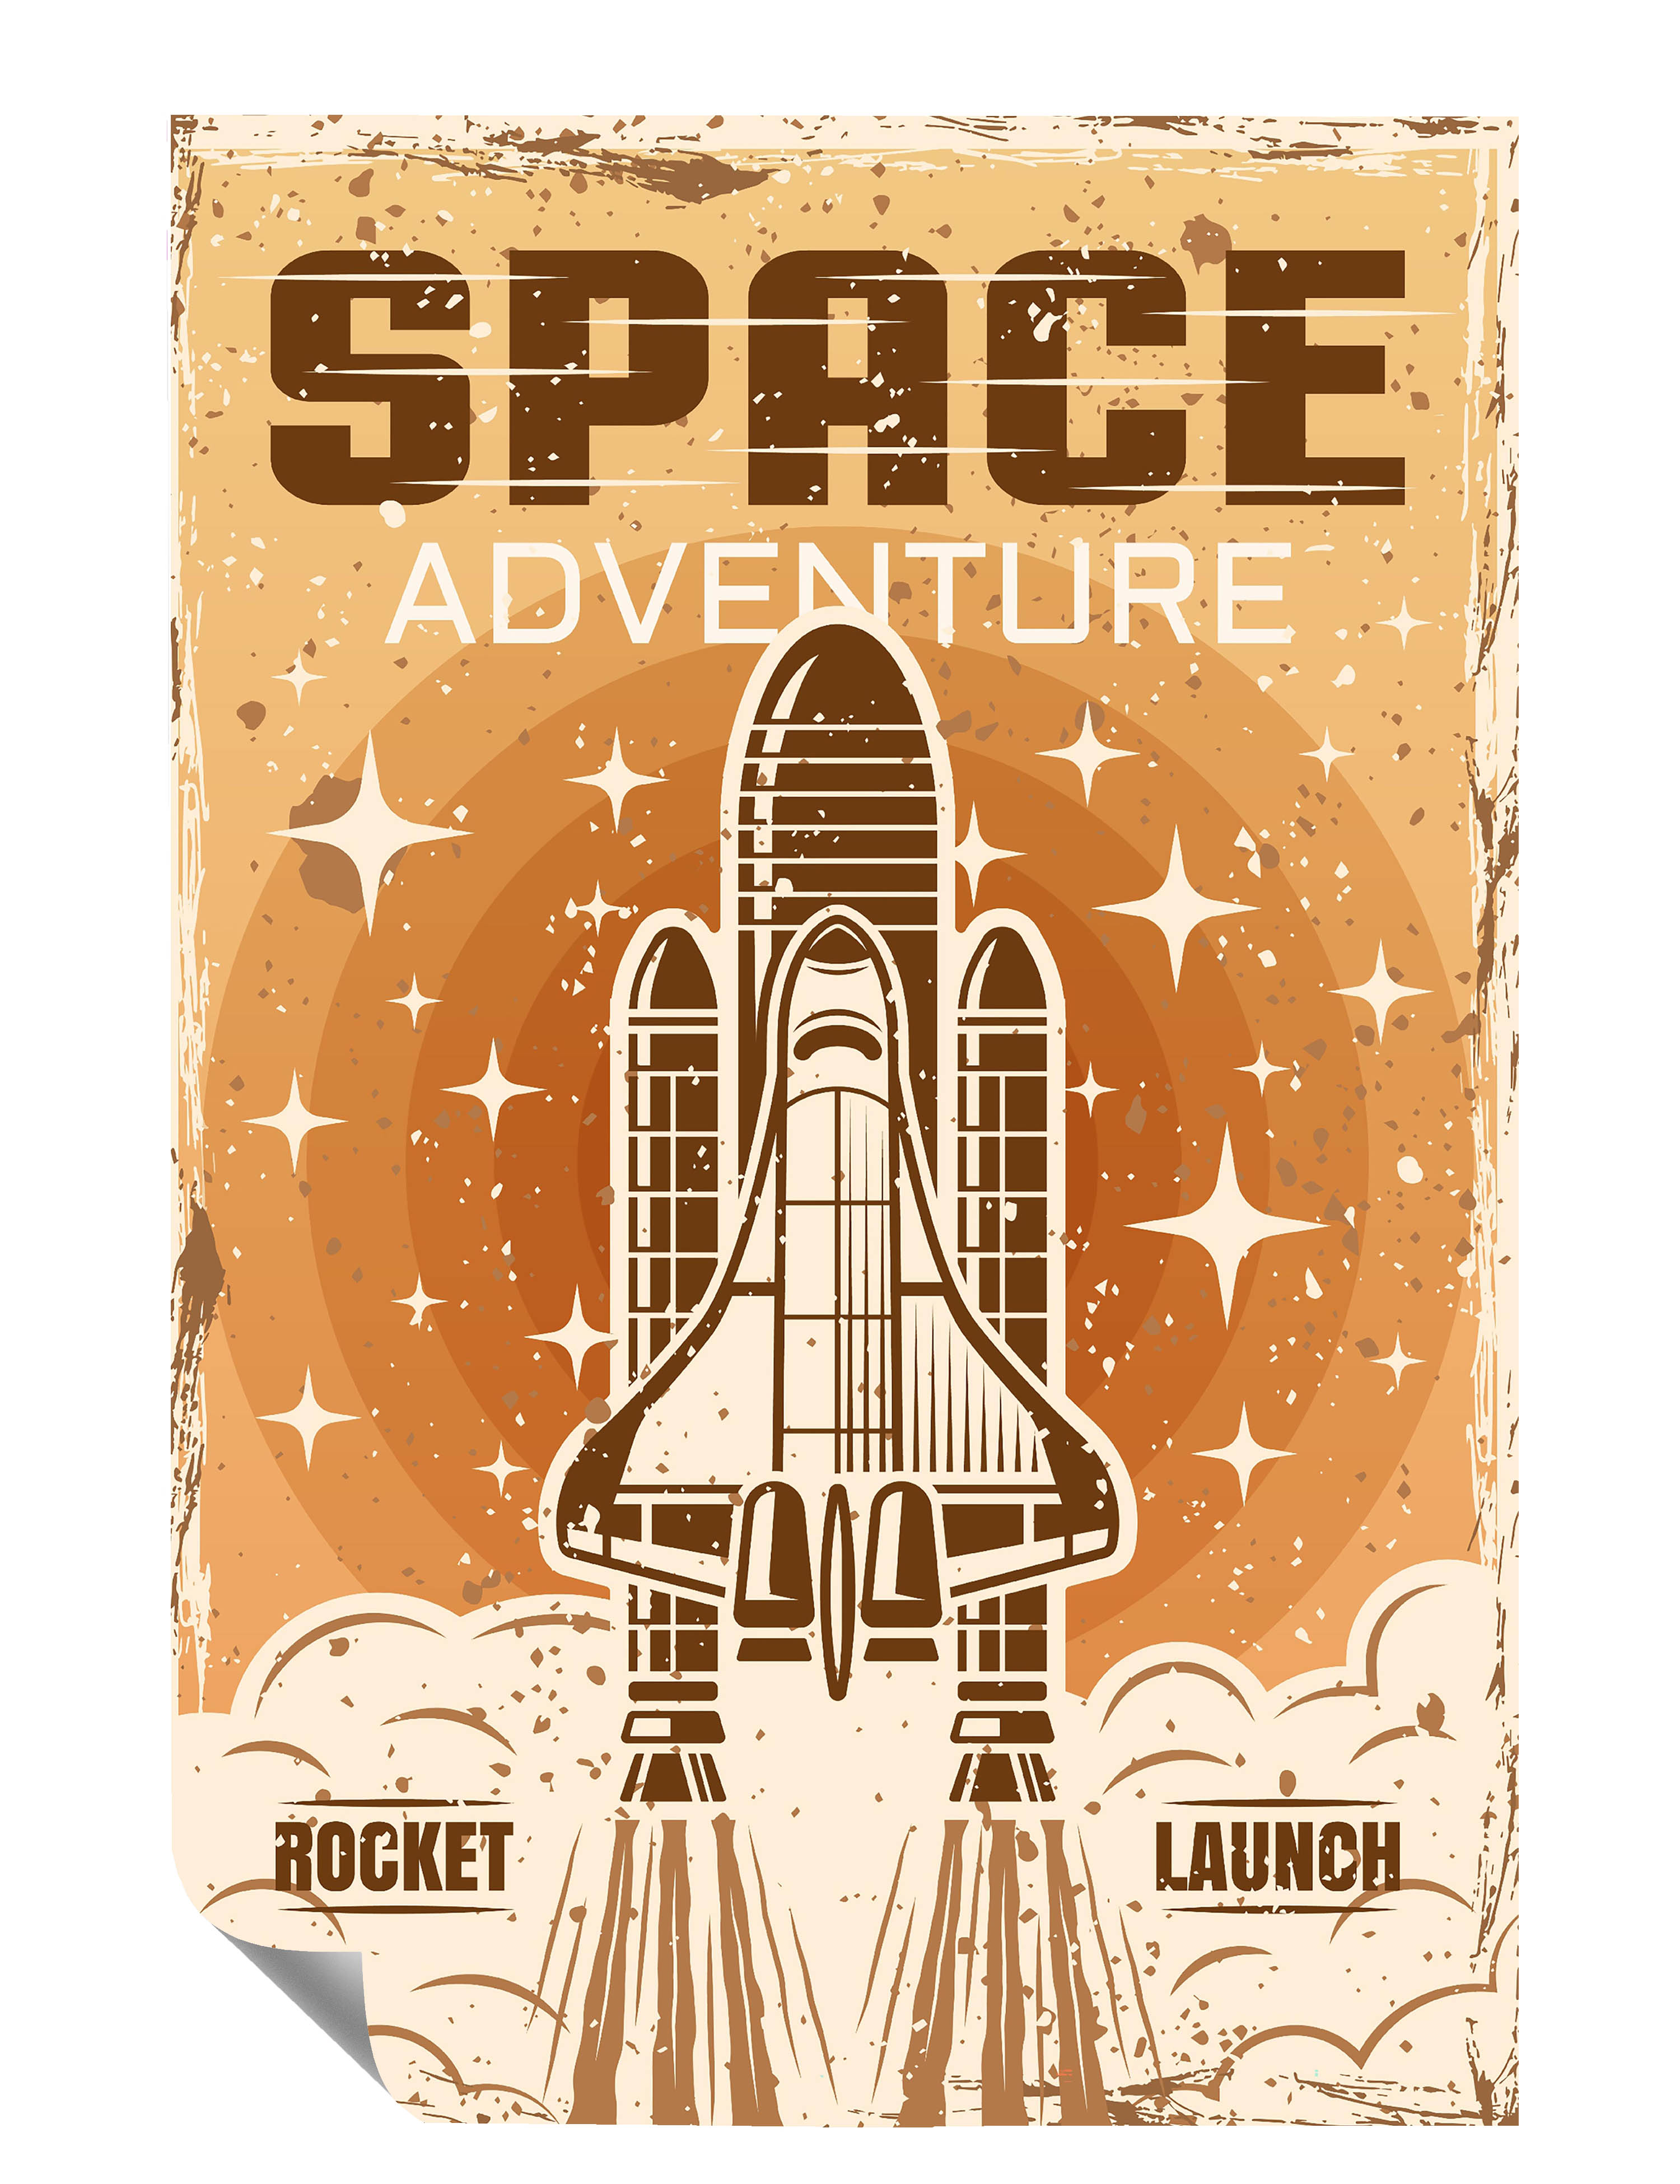 Space Shuttle Retro Illustration Poster P0418